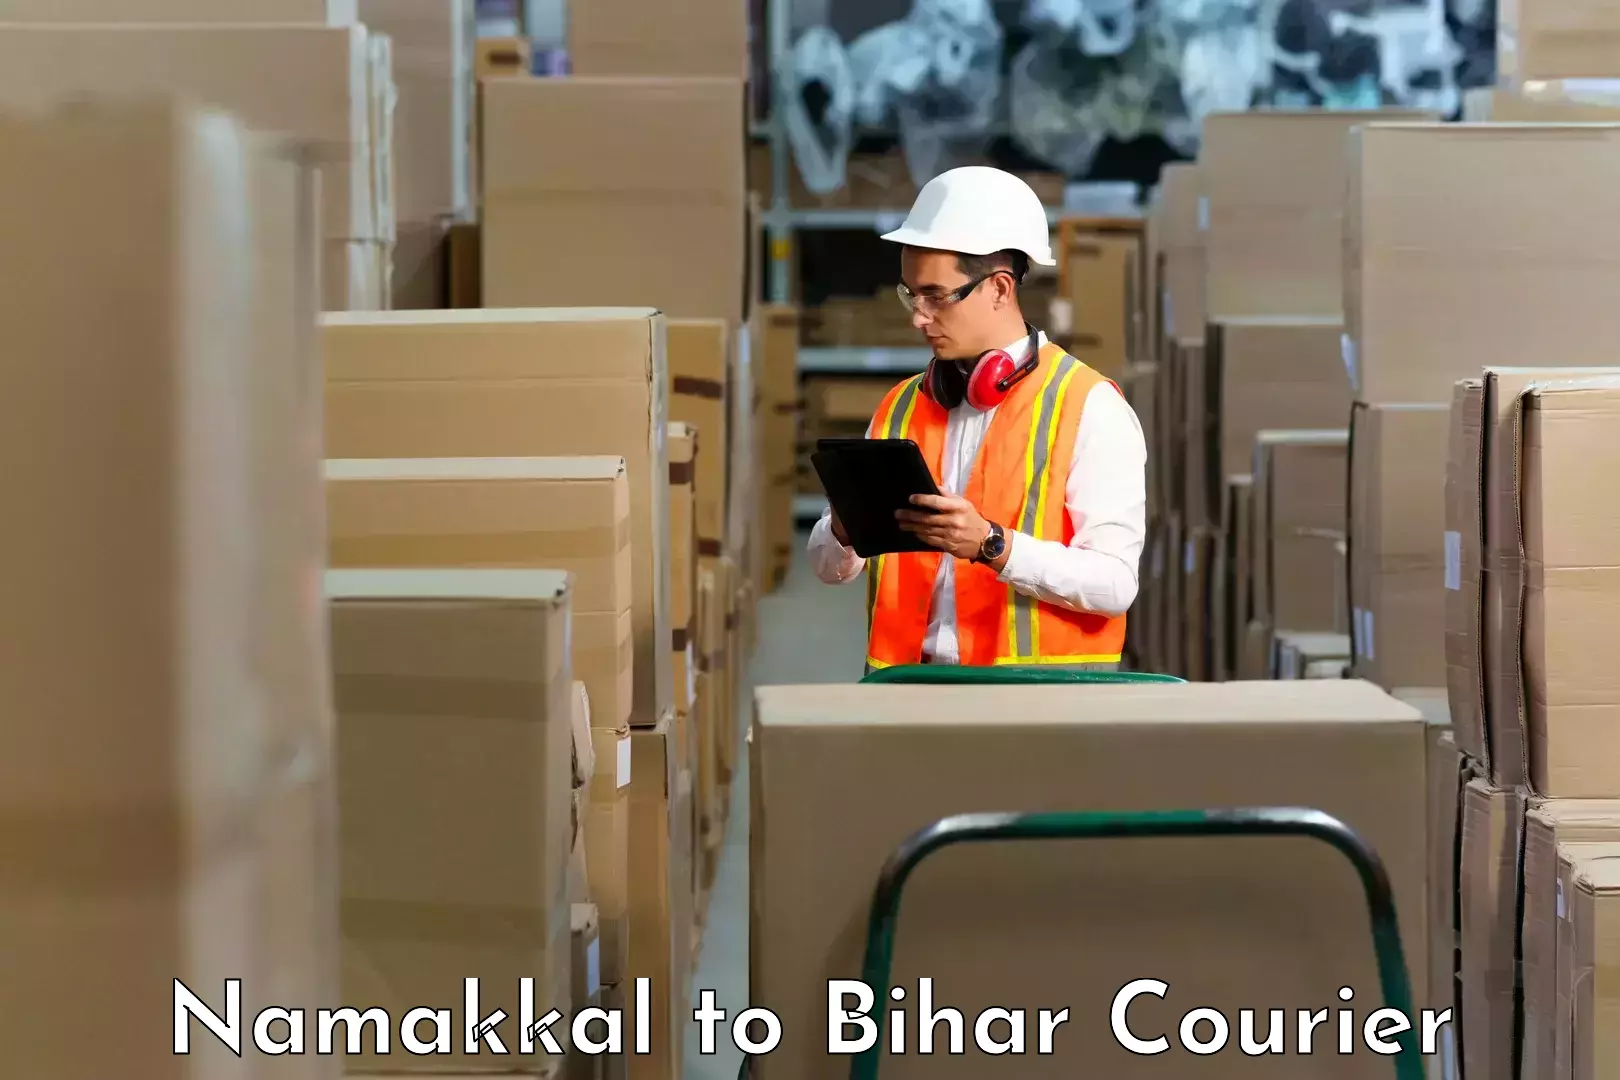 Courier insurance Namakkal to Bhorey